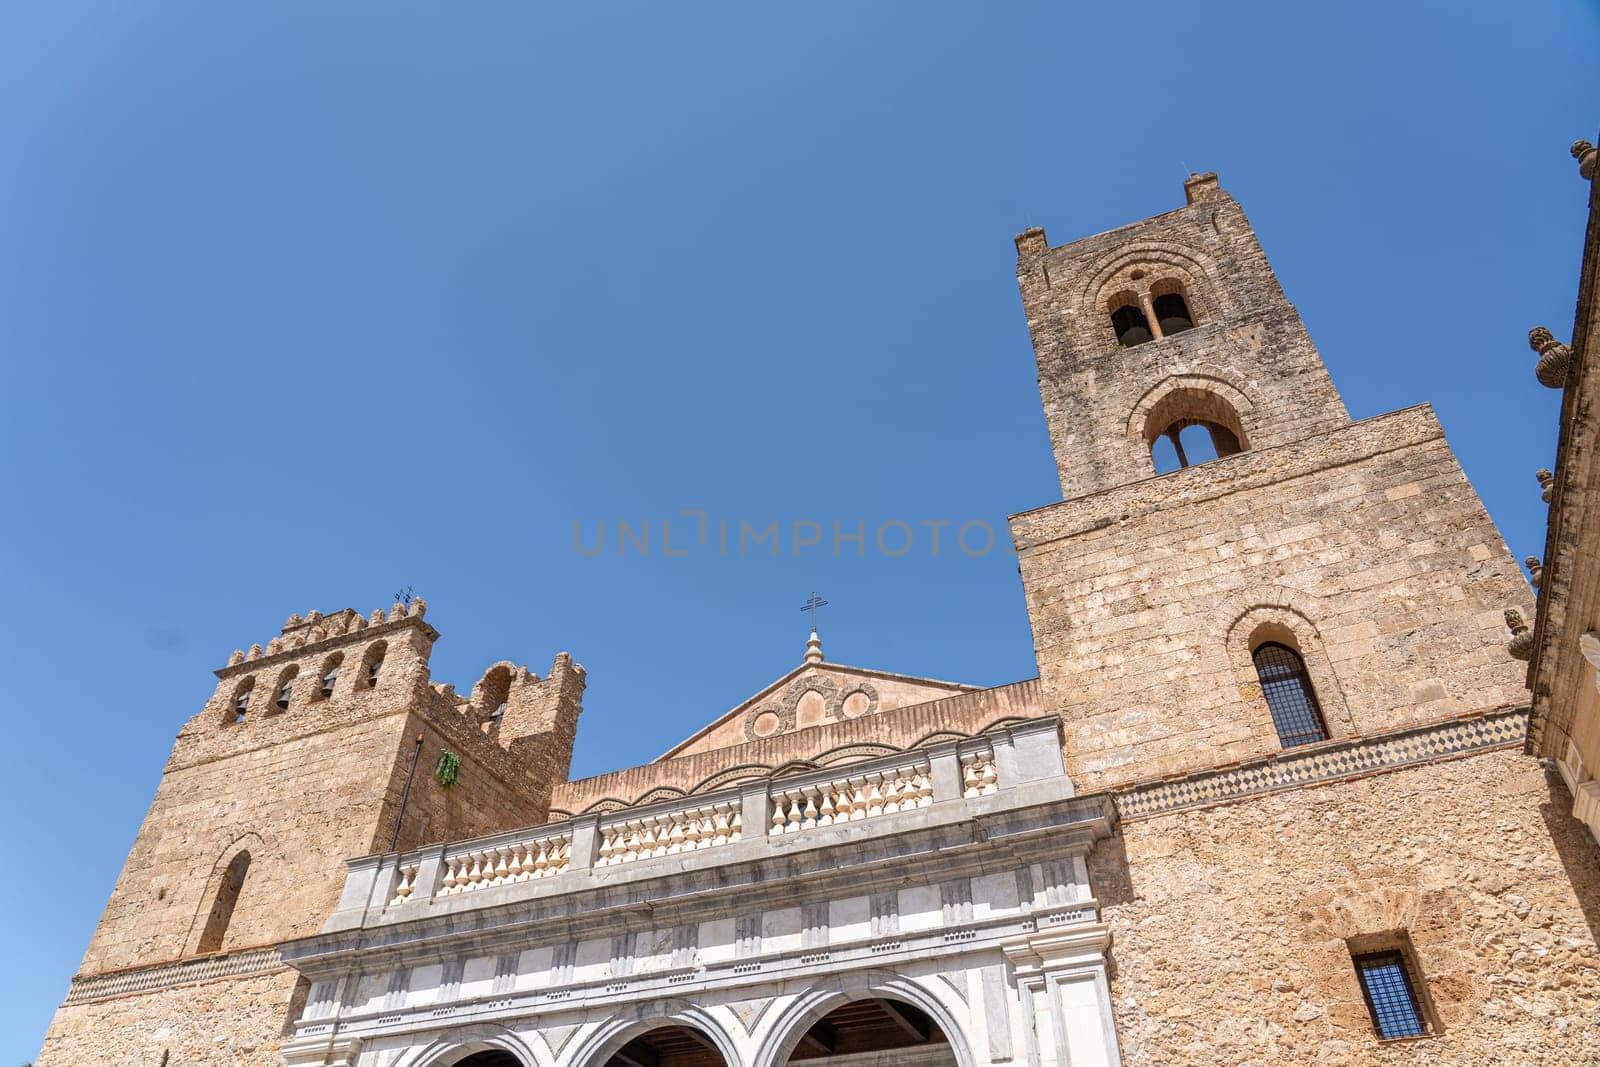 Monreale Cathedral in Sicily by oliverfoerstner